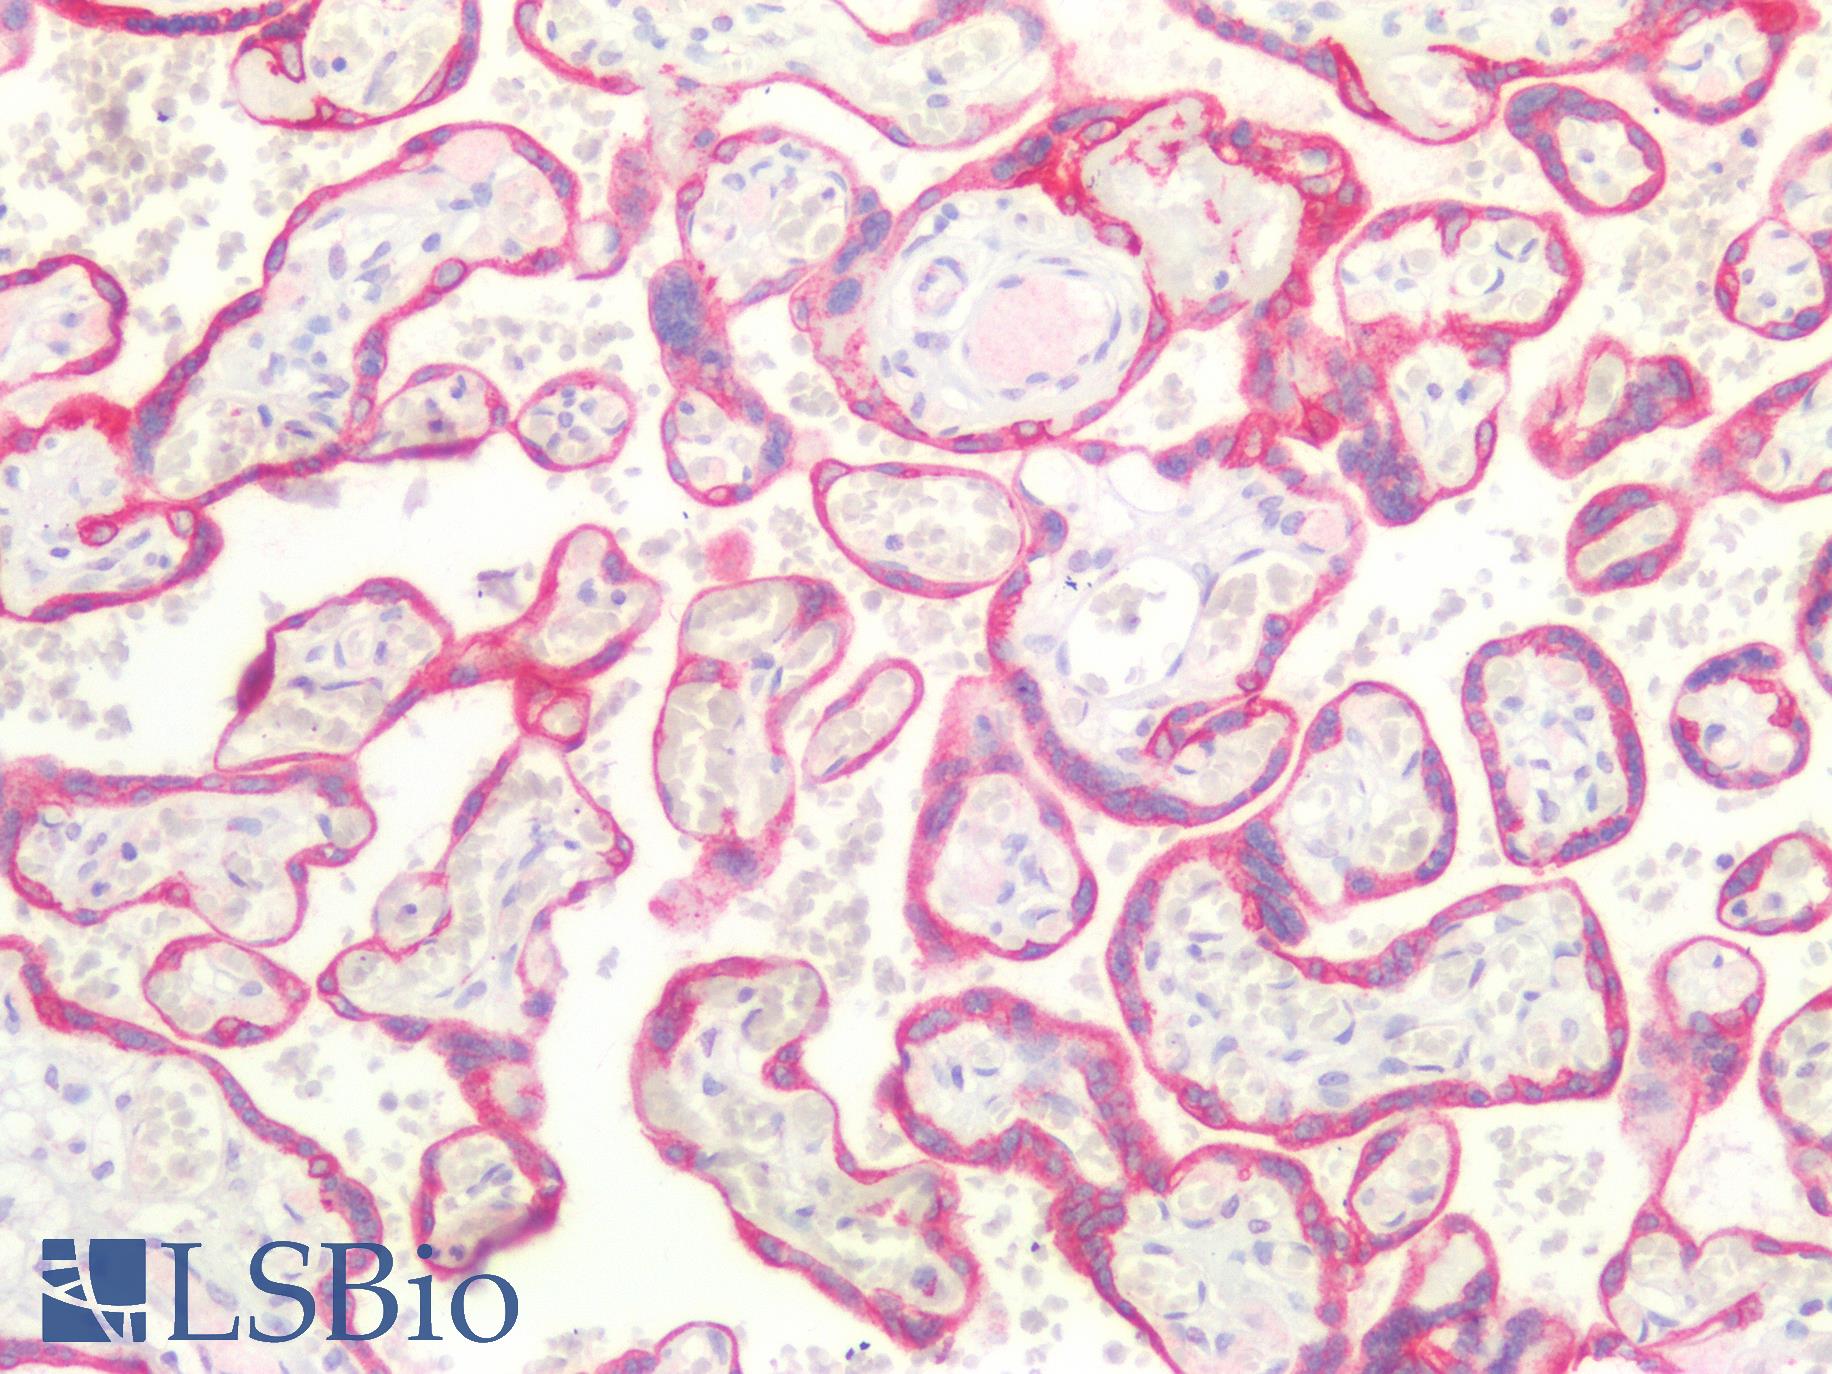 CD36 Antibody - Human Placenta: Formalin-Fixed, Paraffin-Embedded (FFPE)